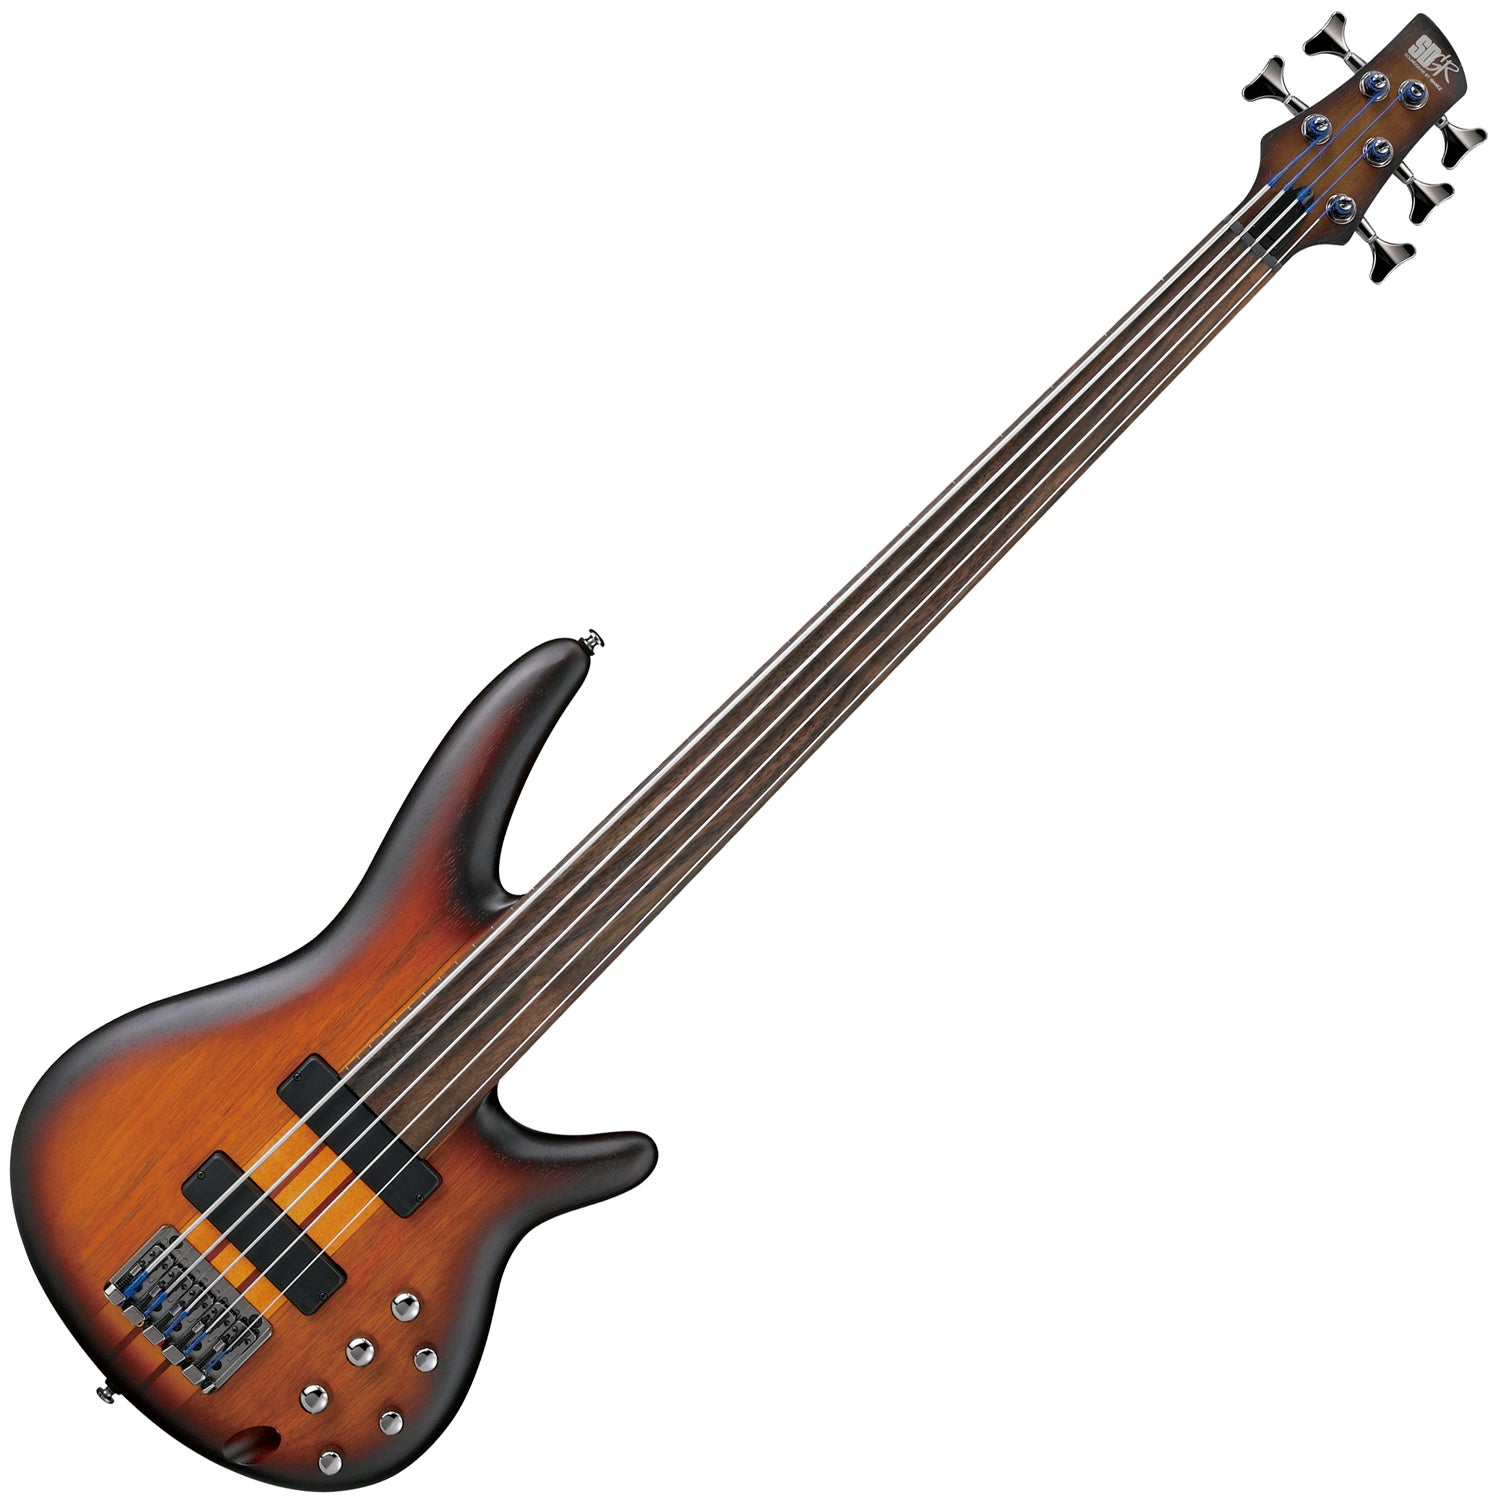 Ibanez Srf705 Bbf 5 String Electric Fretless Sr Bass Guitar, Brown 